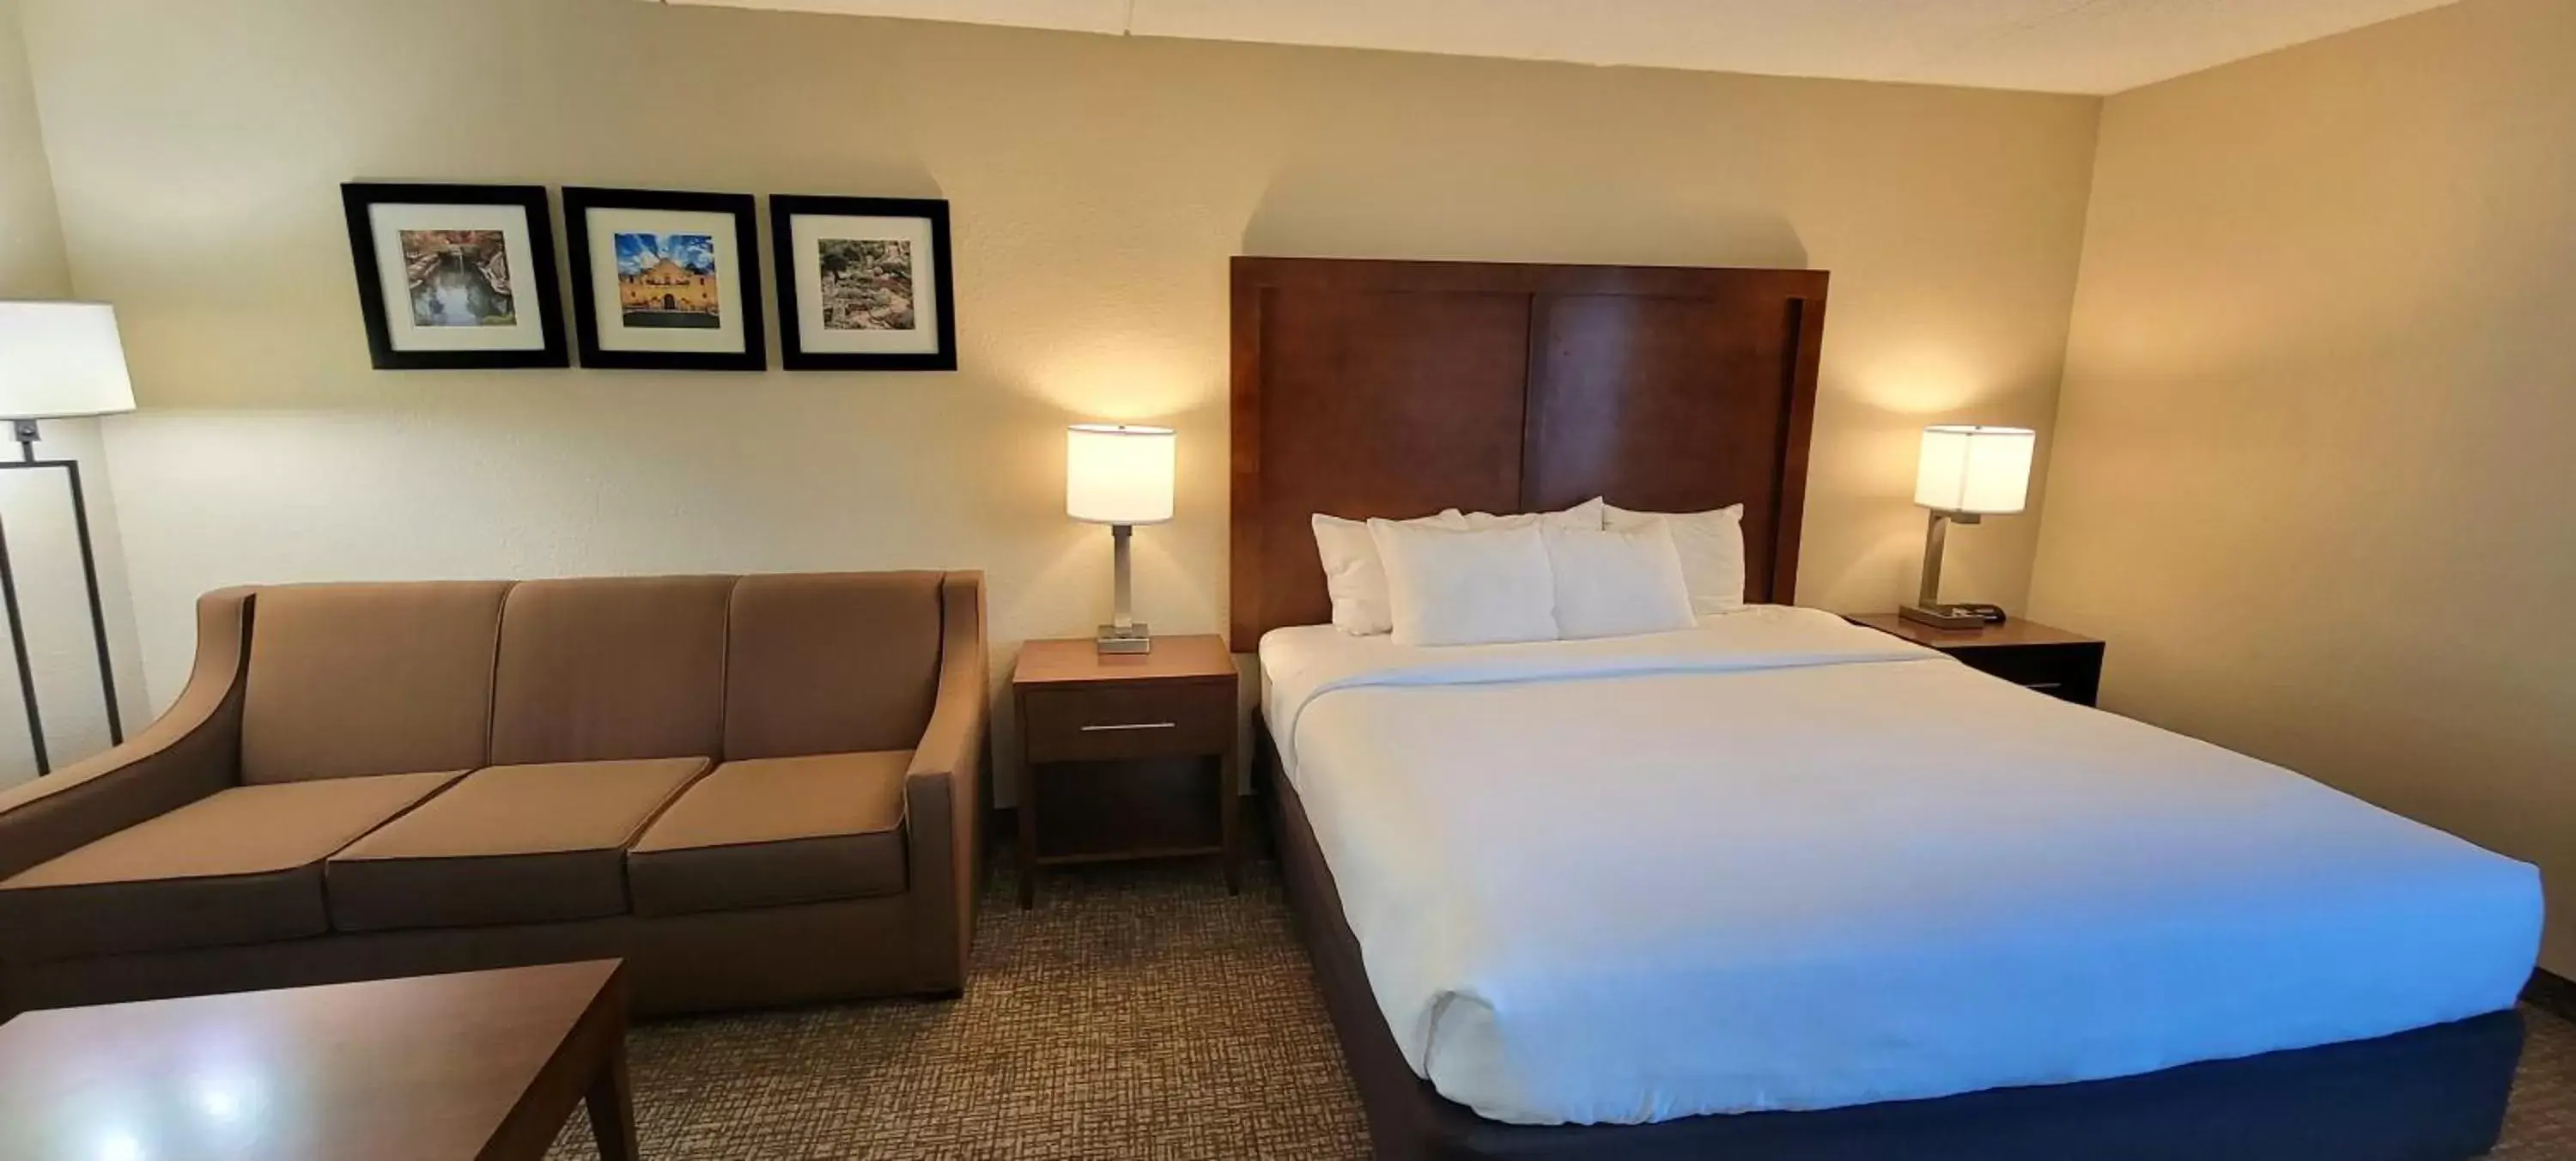 Bed in Comfort Inn & Suites San Antonio Airport